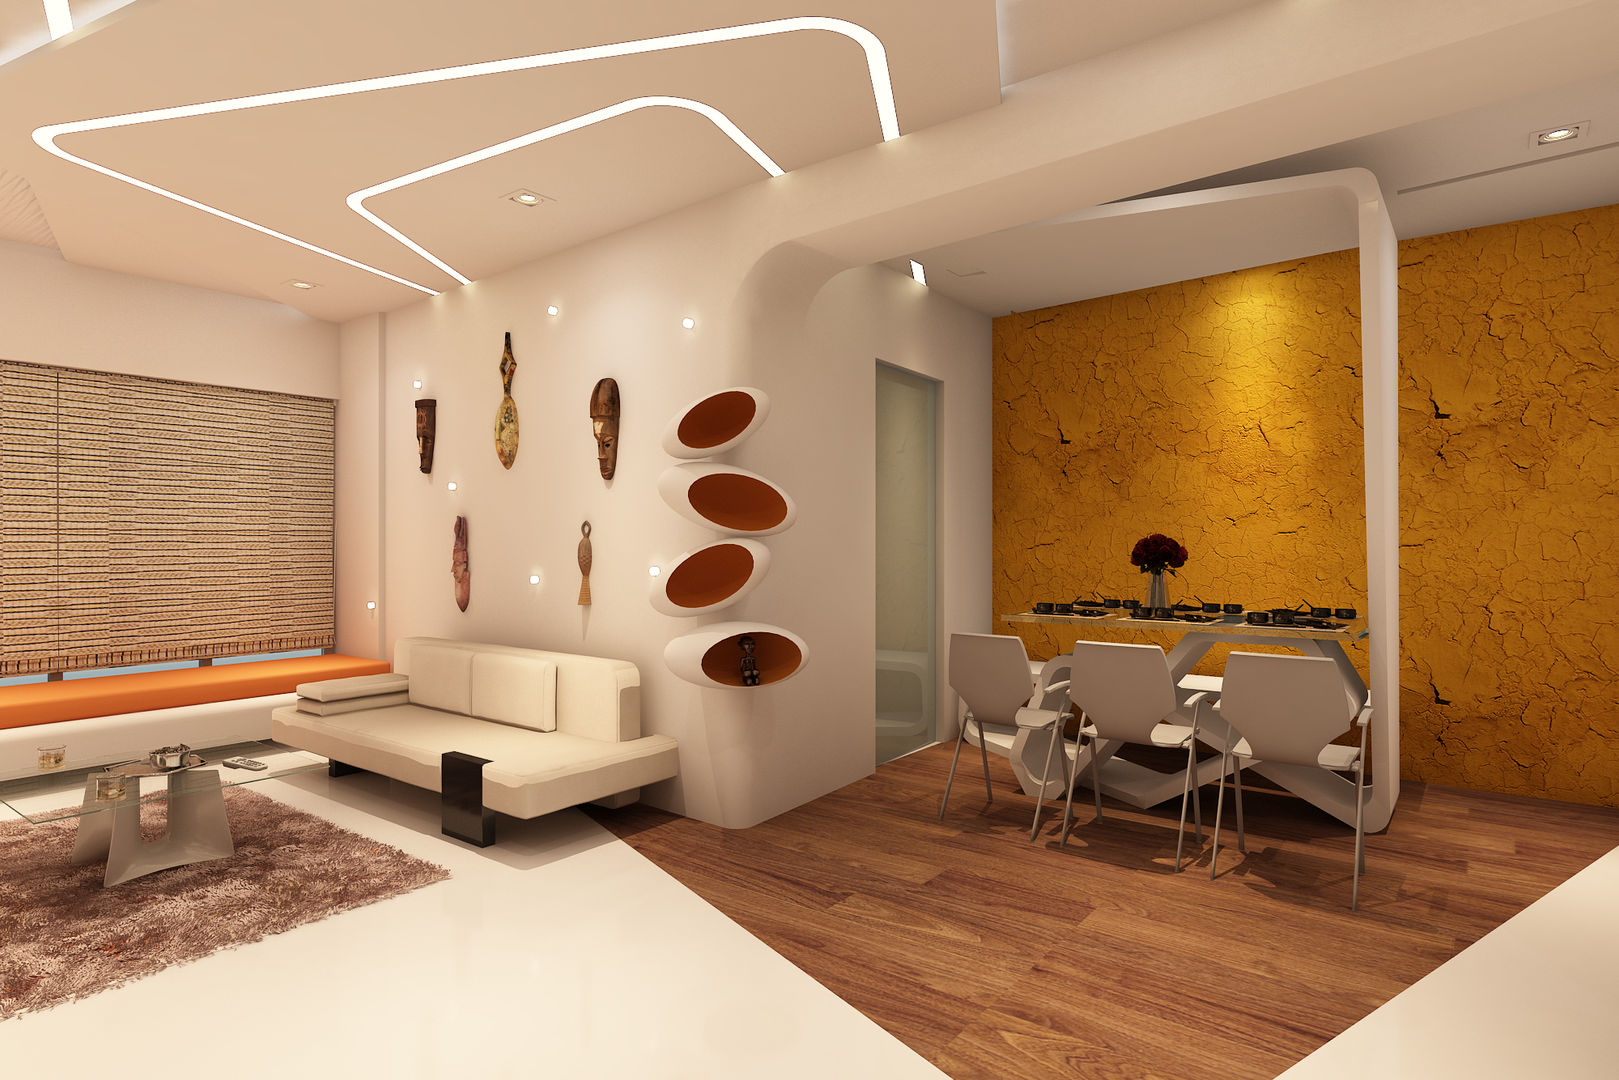 MR. ANCHAL'S RESIDENCE, NEX LVL DESIGNS PVT. LTD. NEX LVL DESIGNS PVT. LTD. Living room Lighting